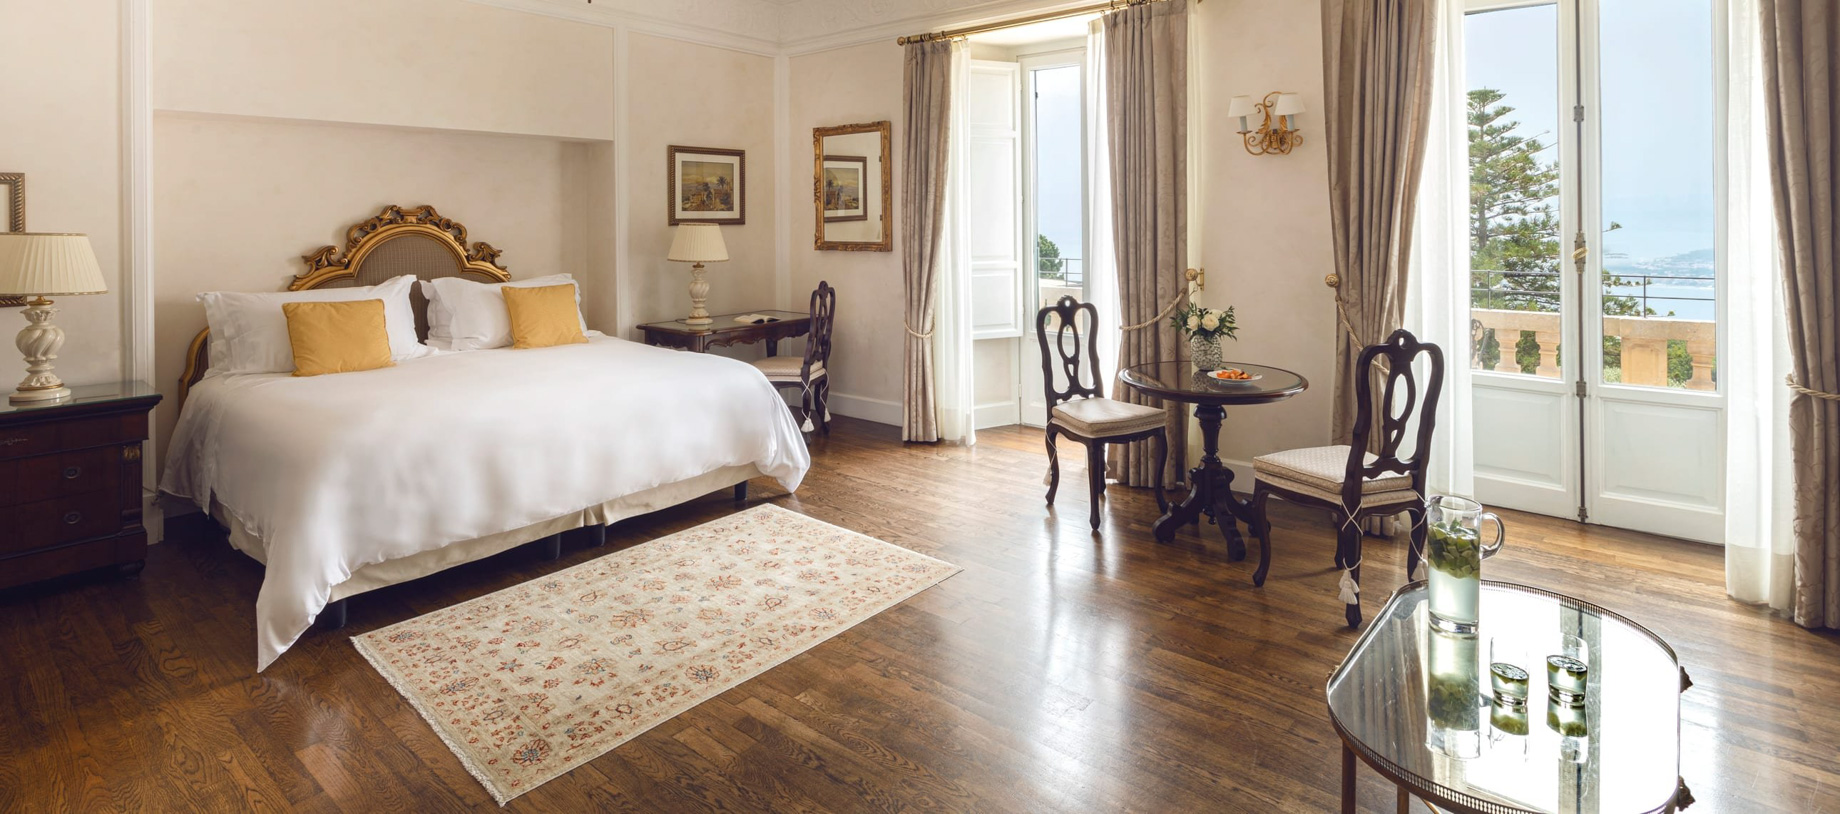 128 – Grand Hotel Timeo, A Belmond Hotel – Taormina, Italy – Junior Suite